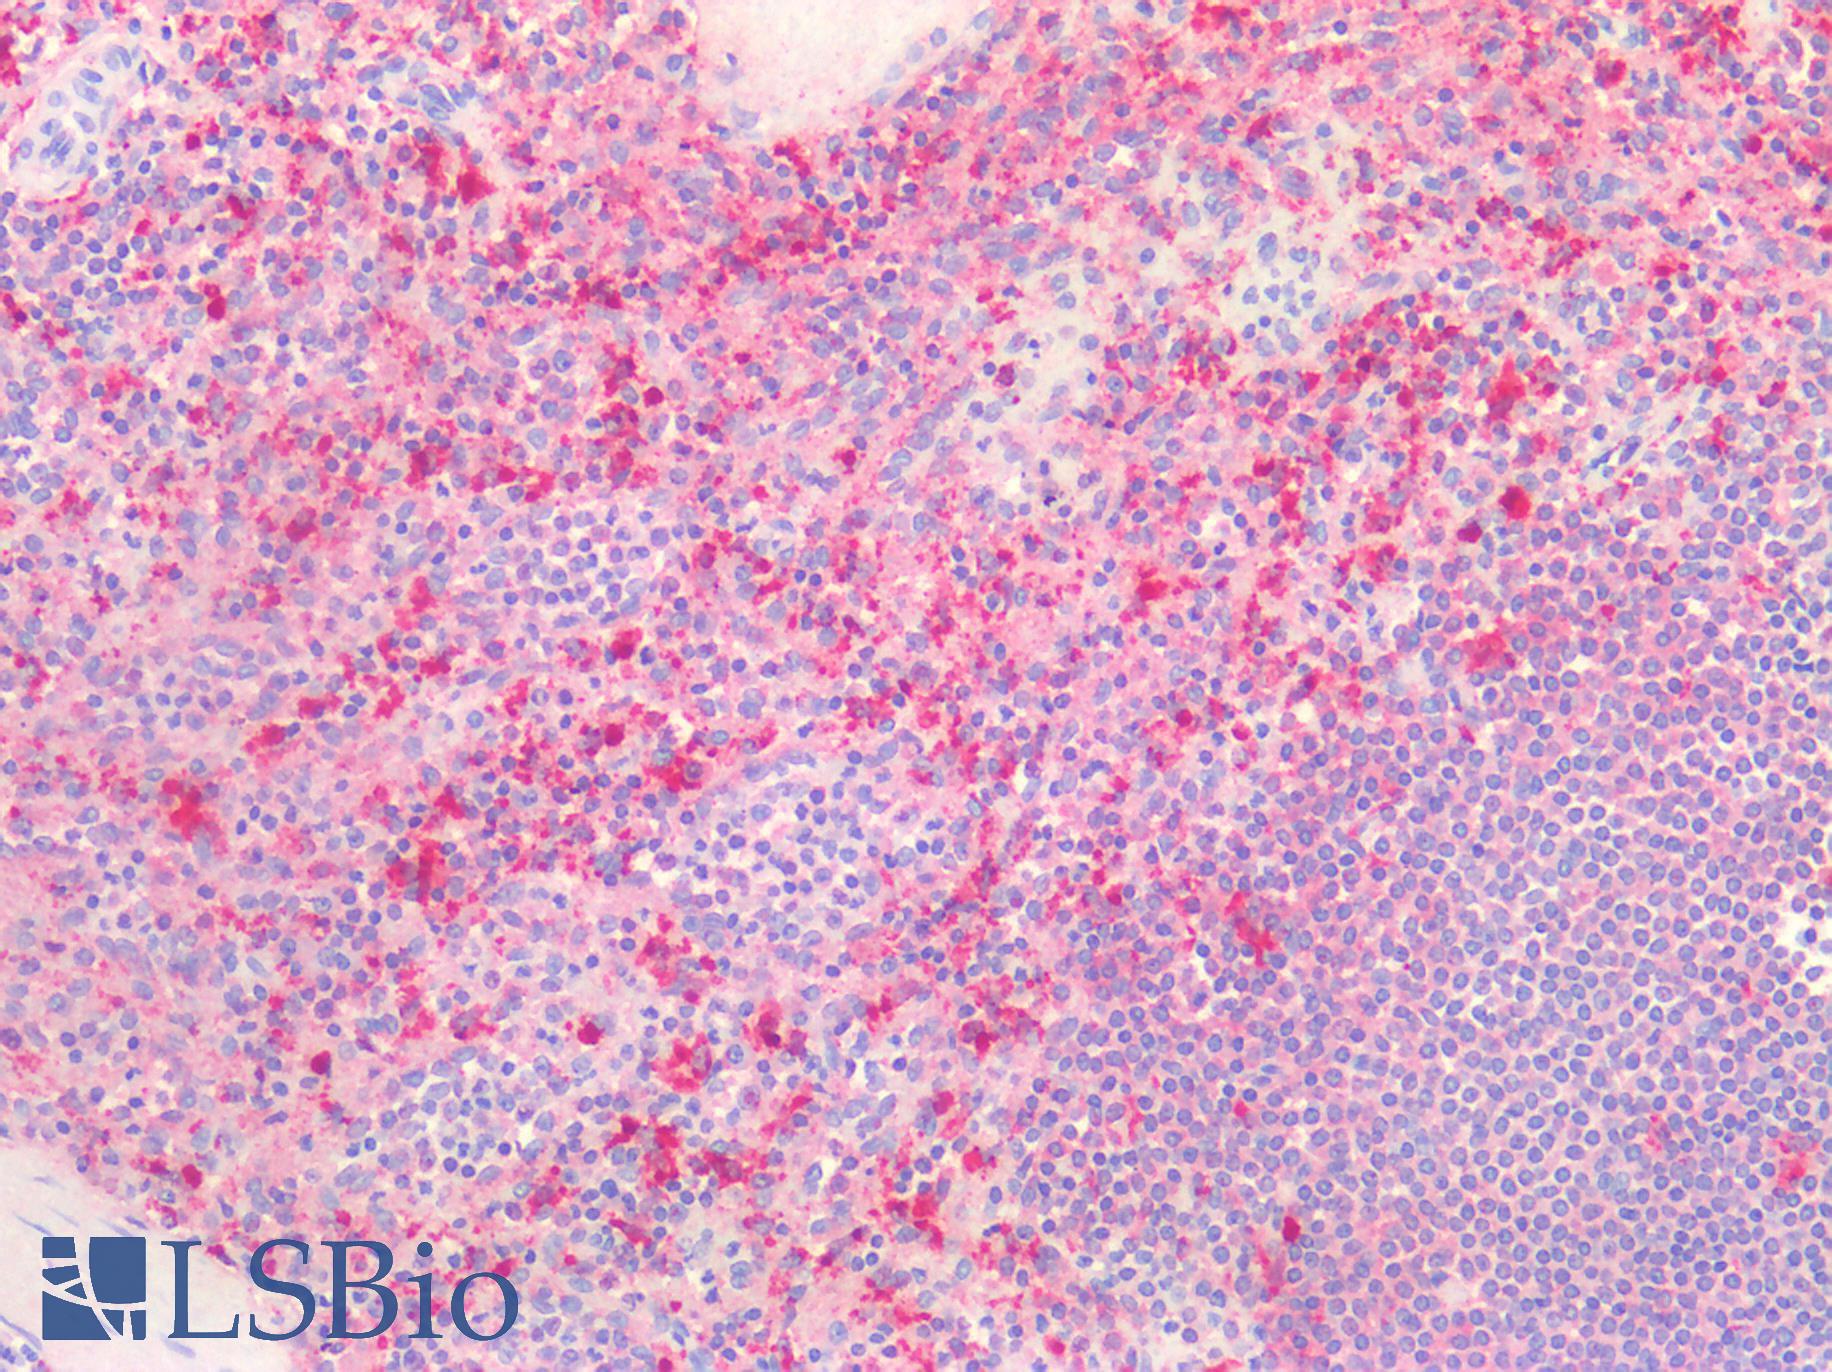 CTSB / Cathepsin B Antibody - Human Spleen: Formalin-Fixed, Paraffin-Embedded (FFPE)